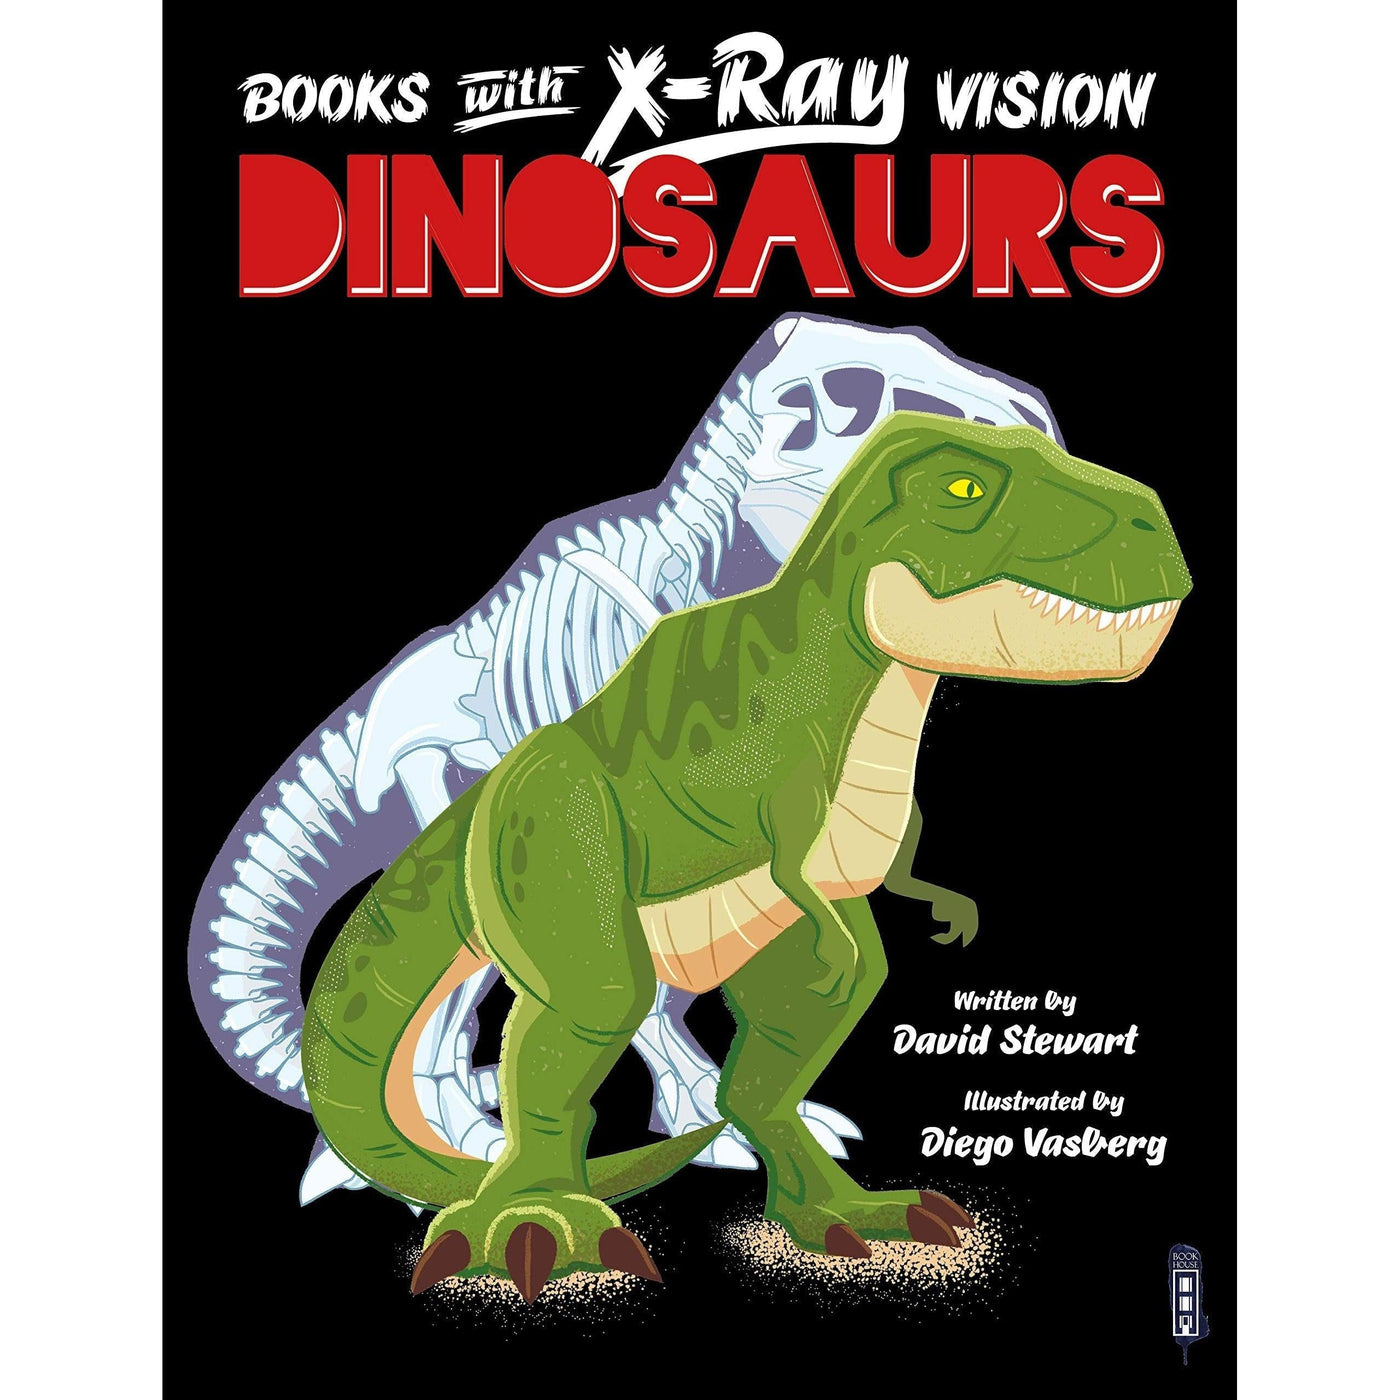 Books With X-Ray Vision: Dinosaurs - David Stewart & Diego Vaisberg